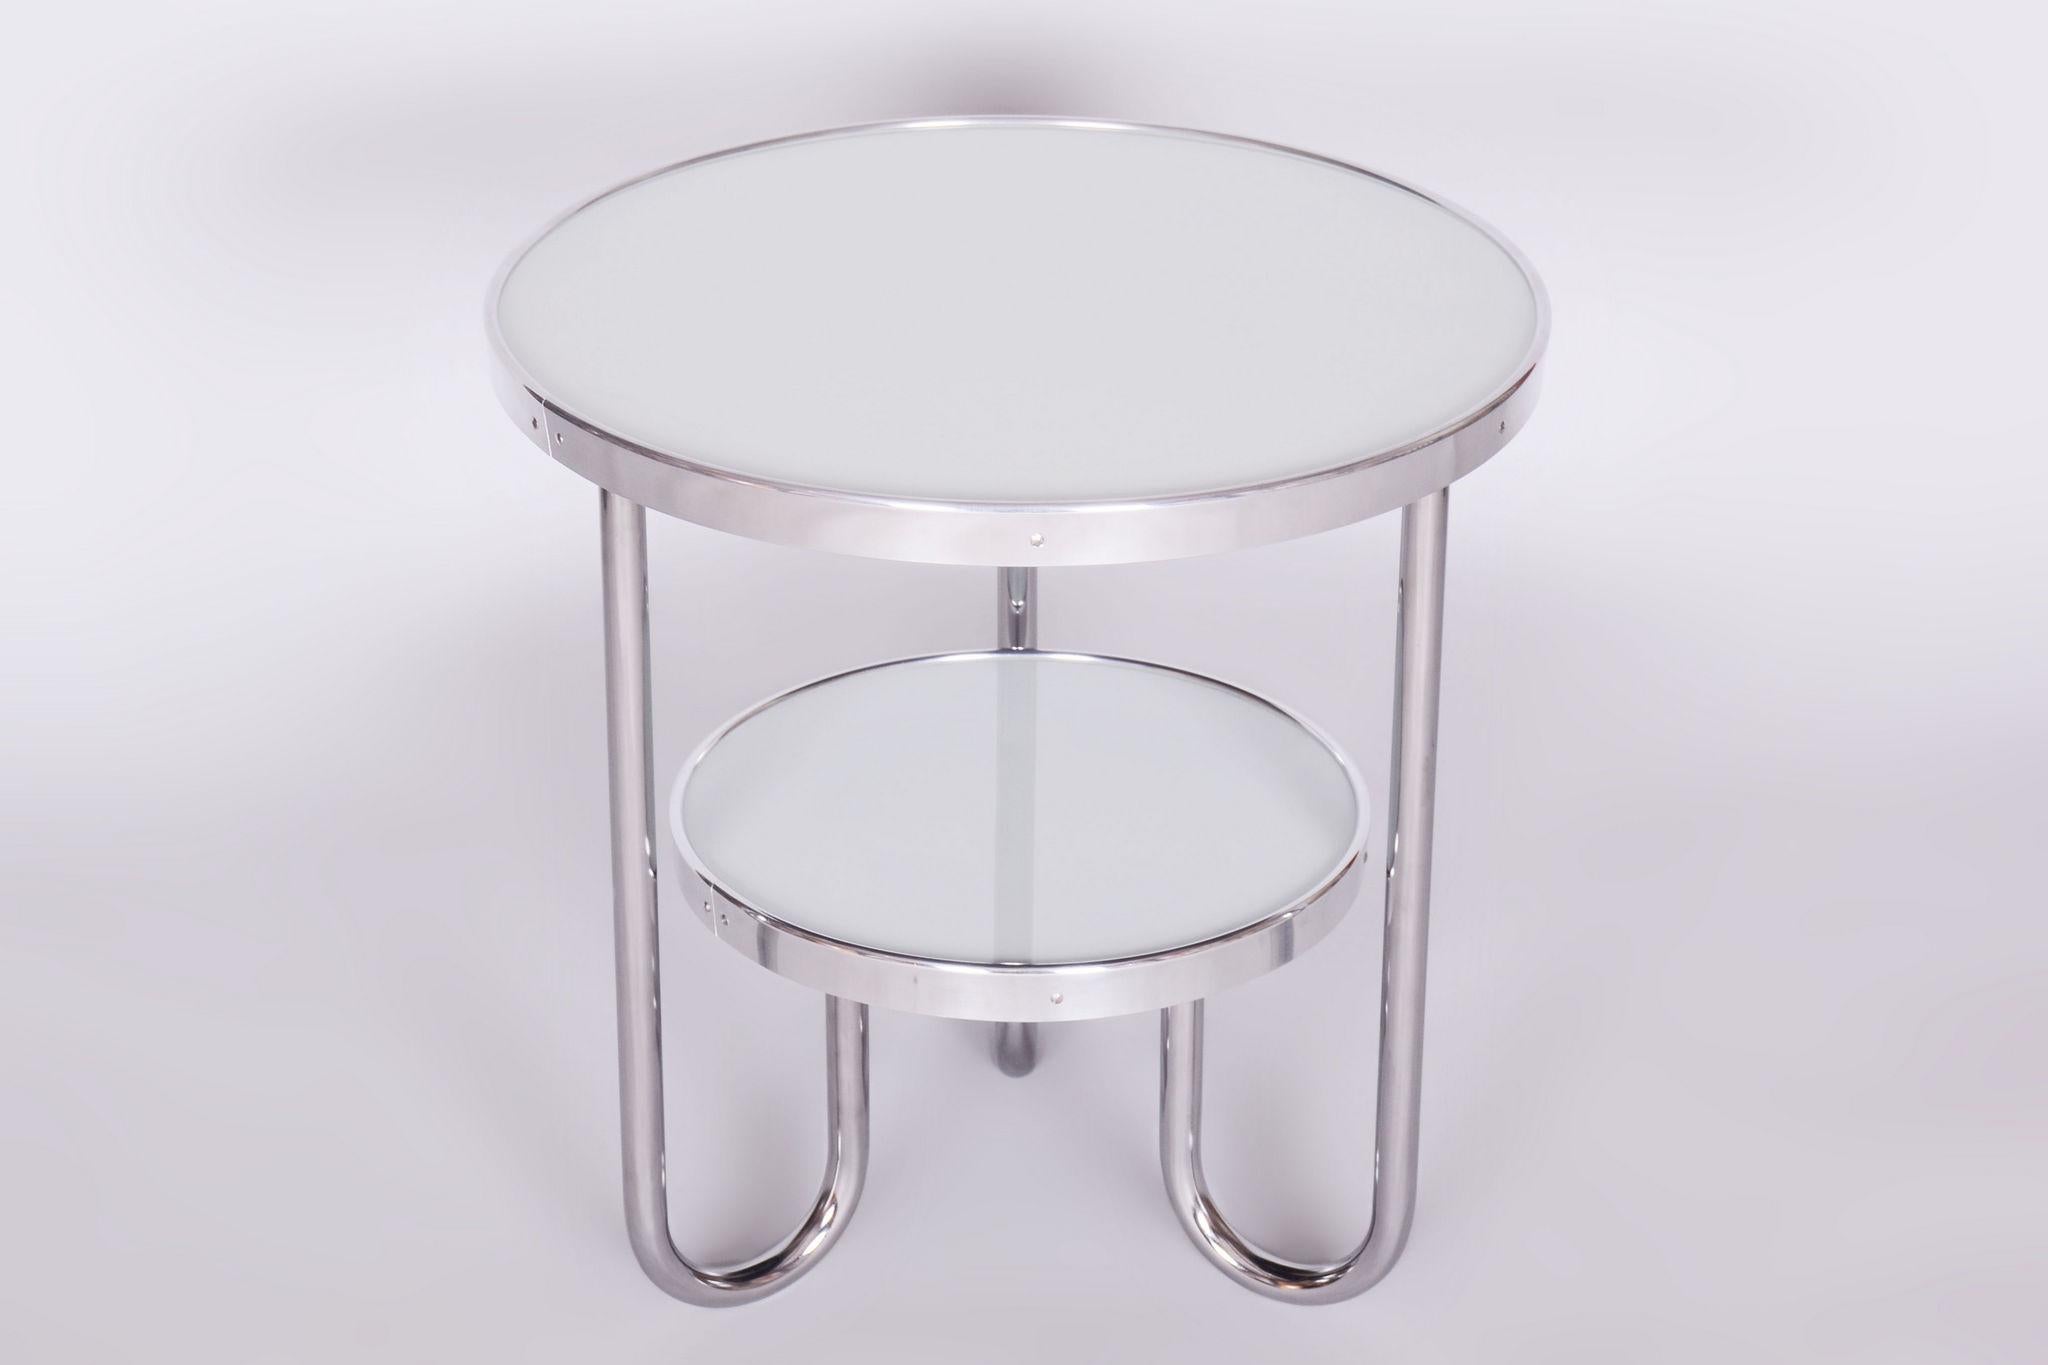 Restored Bauhaus Small White Table, Kovona, Chrome, Czechia, 1930s In Good Condition For Sale In Horomerice, CZ